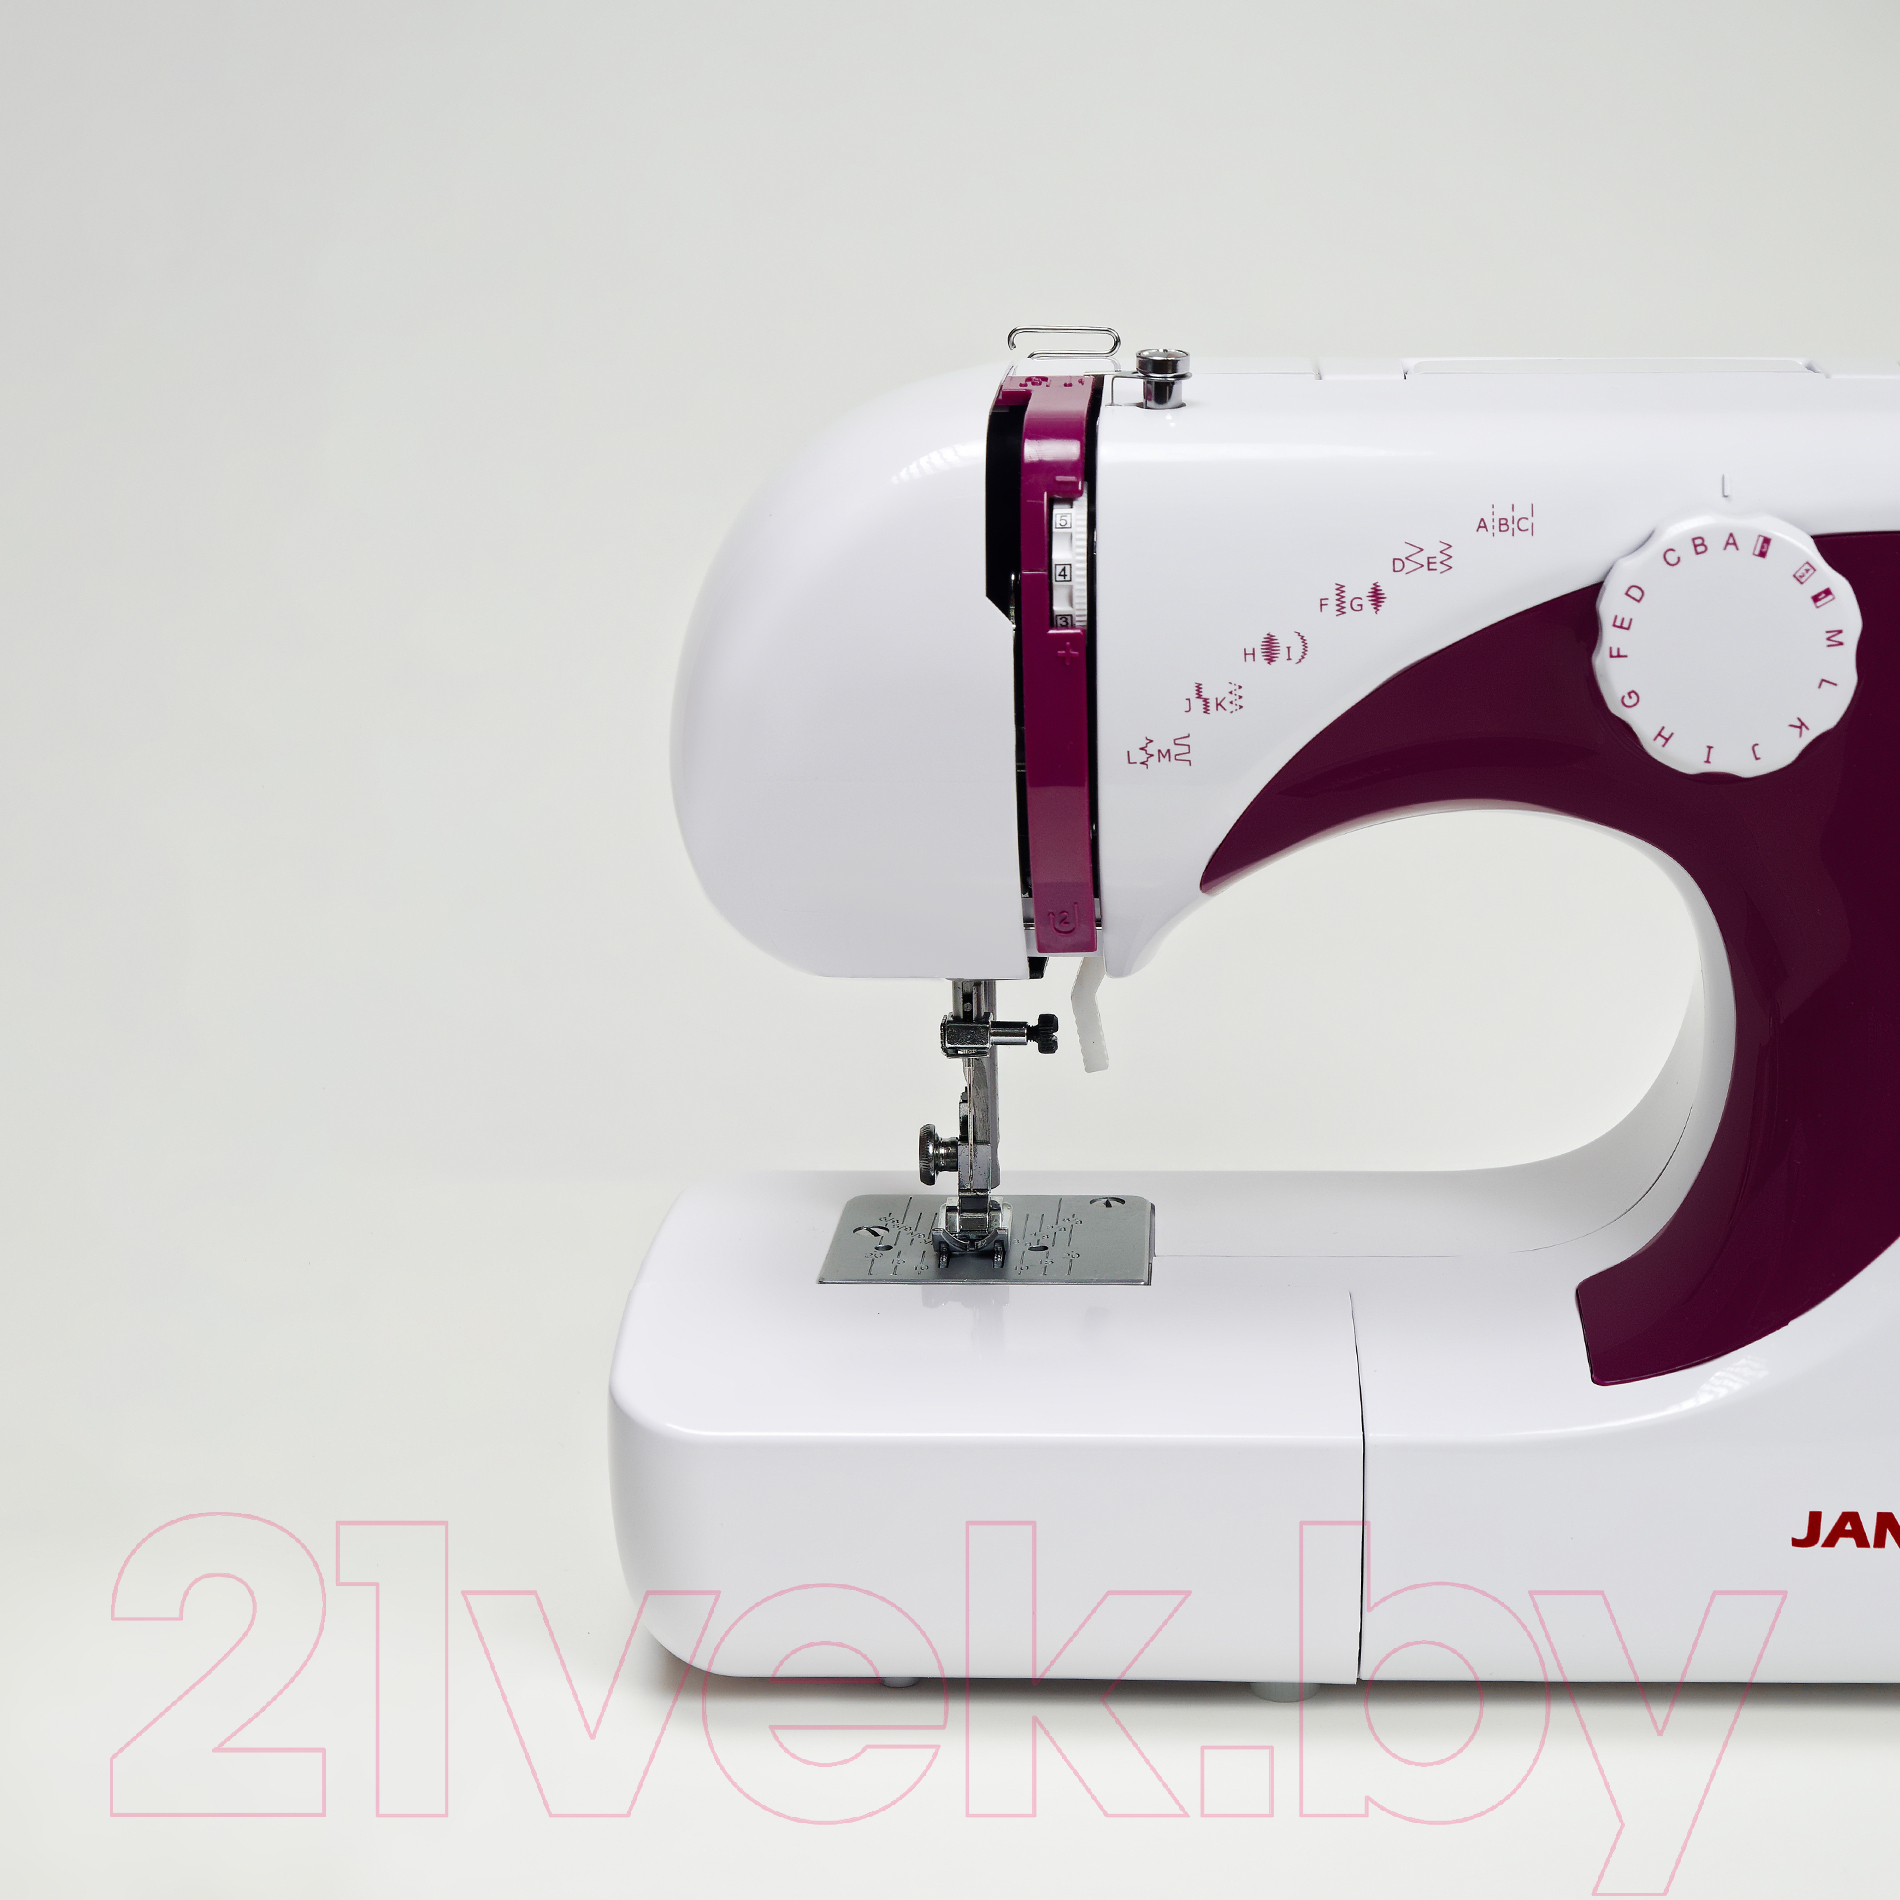 Швейная машина Janete 565